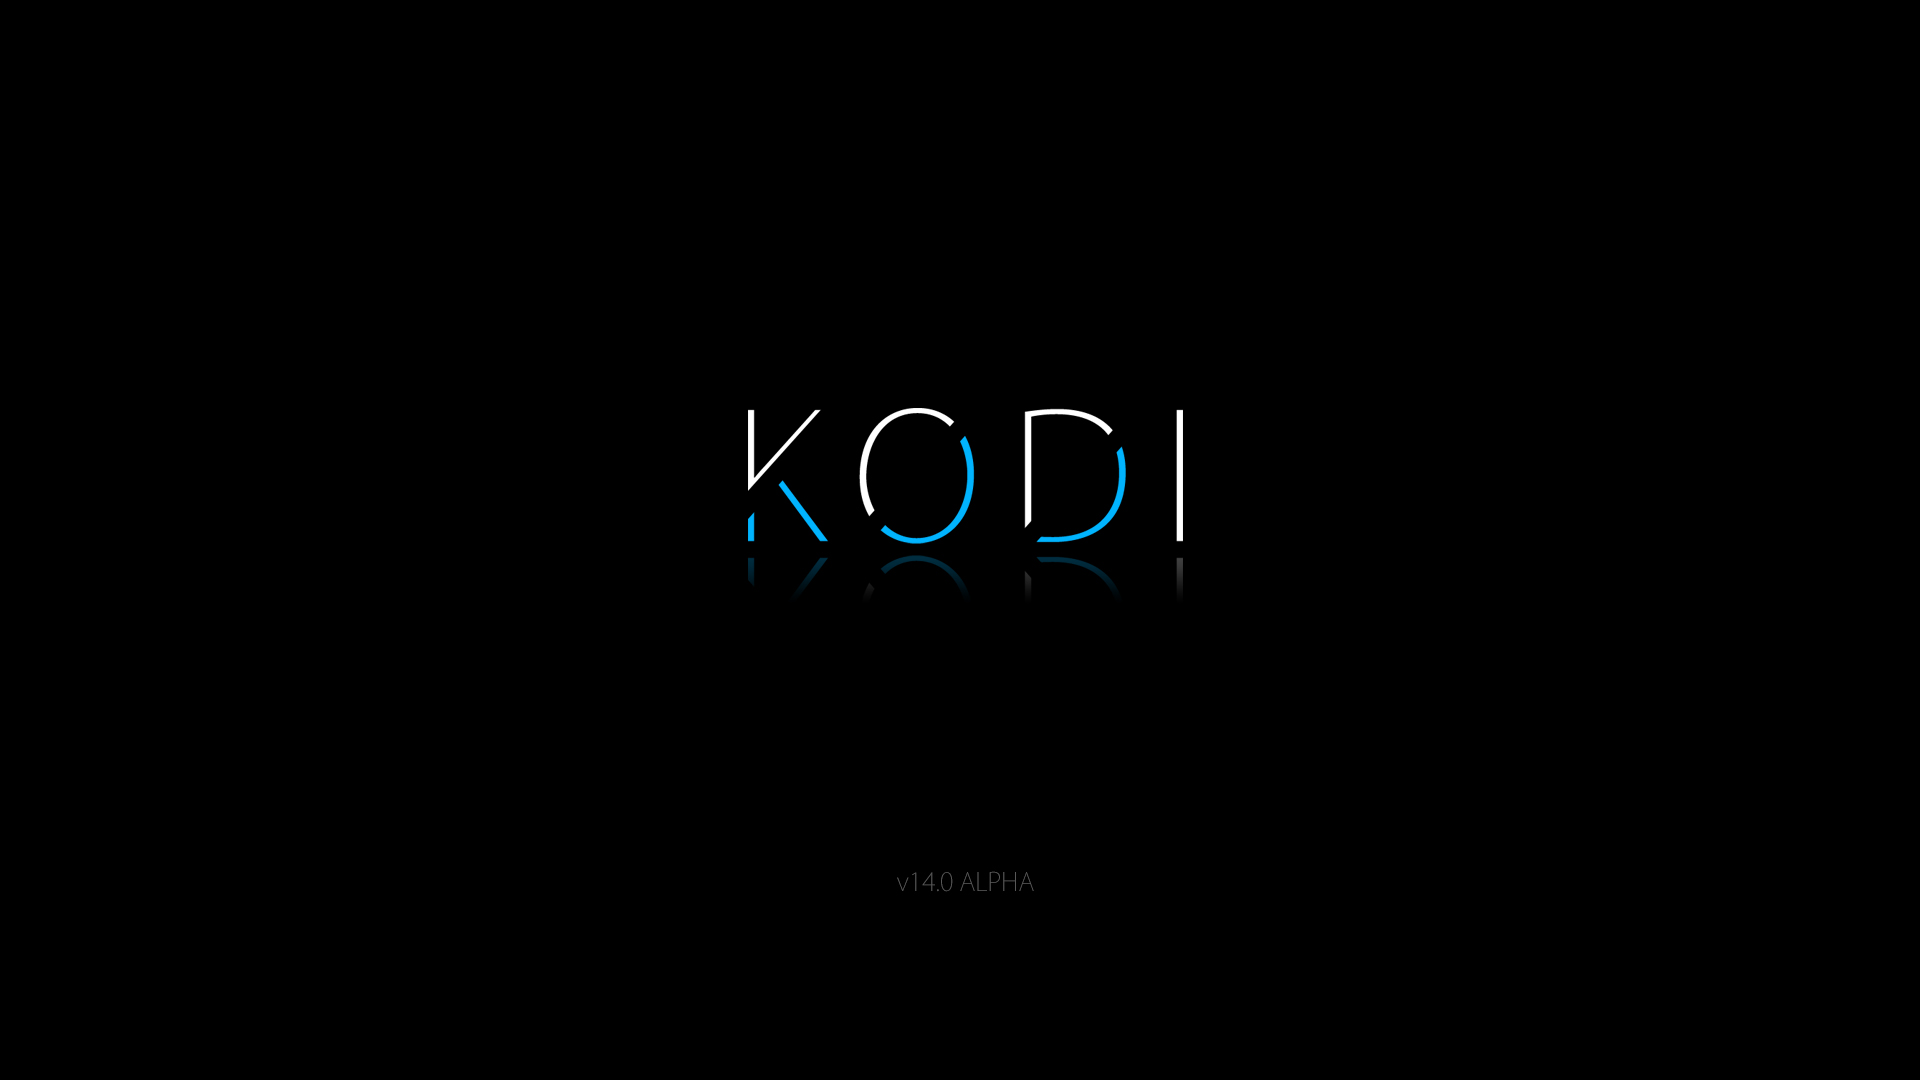 download the new version for windows Kodi 20.2